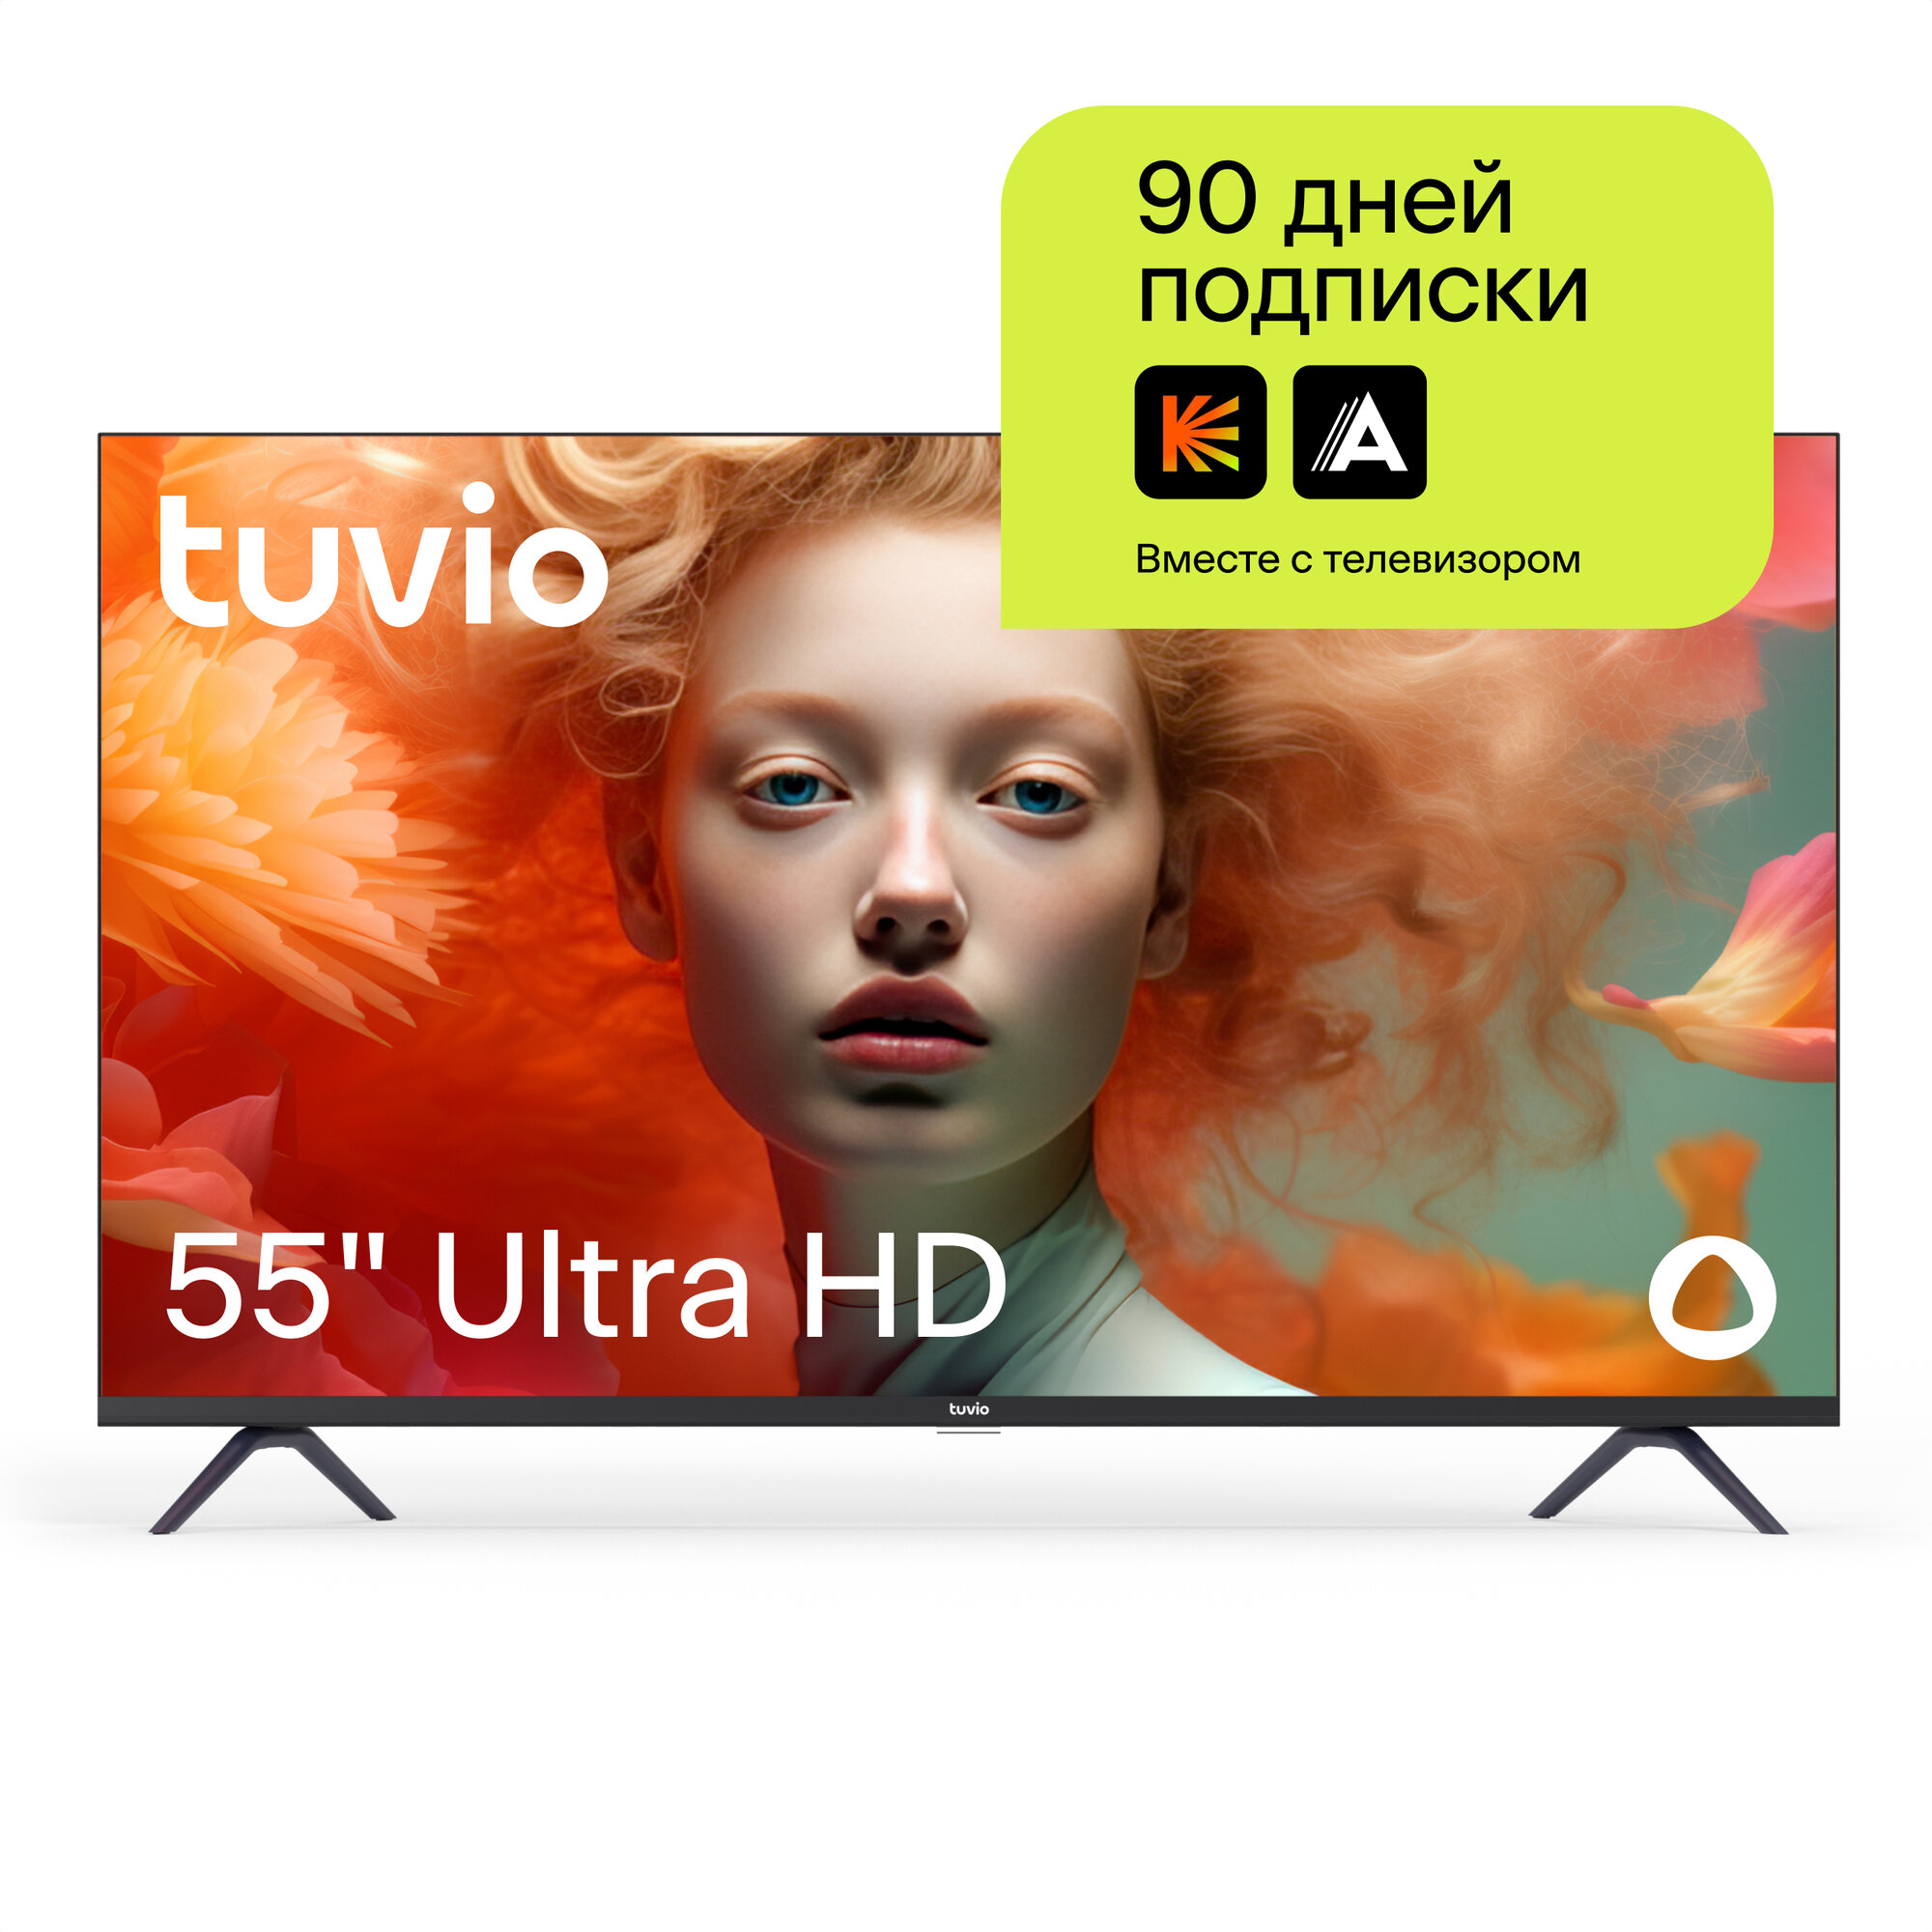 55" Телевизор Tuvio TD55UFBHV1 VA, черный